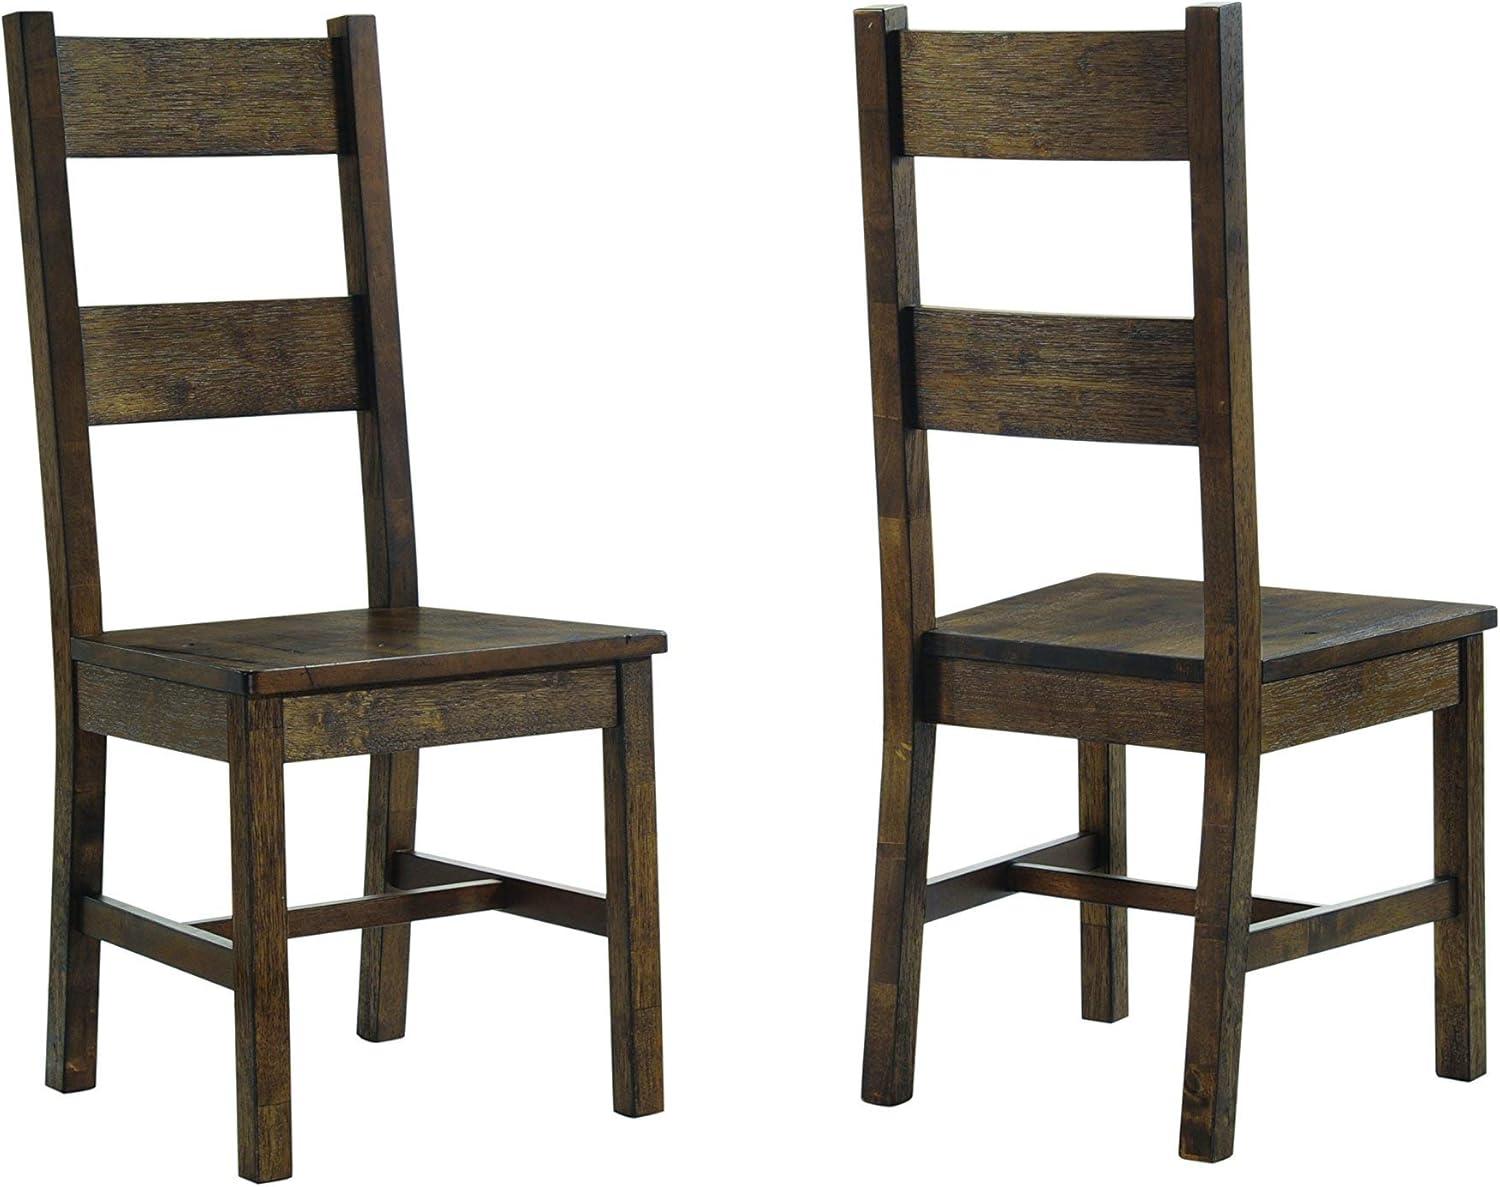 Rustic Golden Brown Wooden Ladderback Side Chair